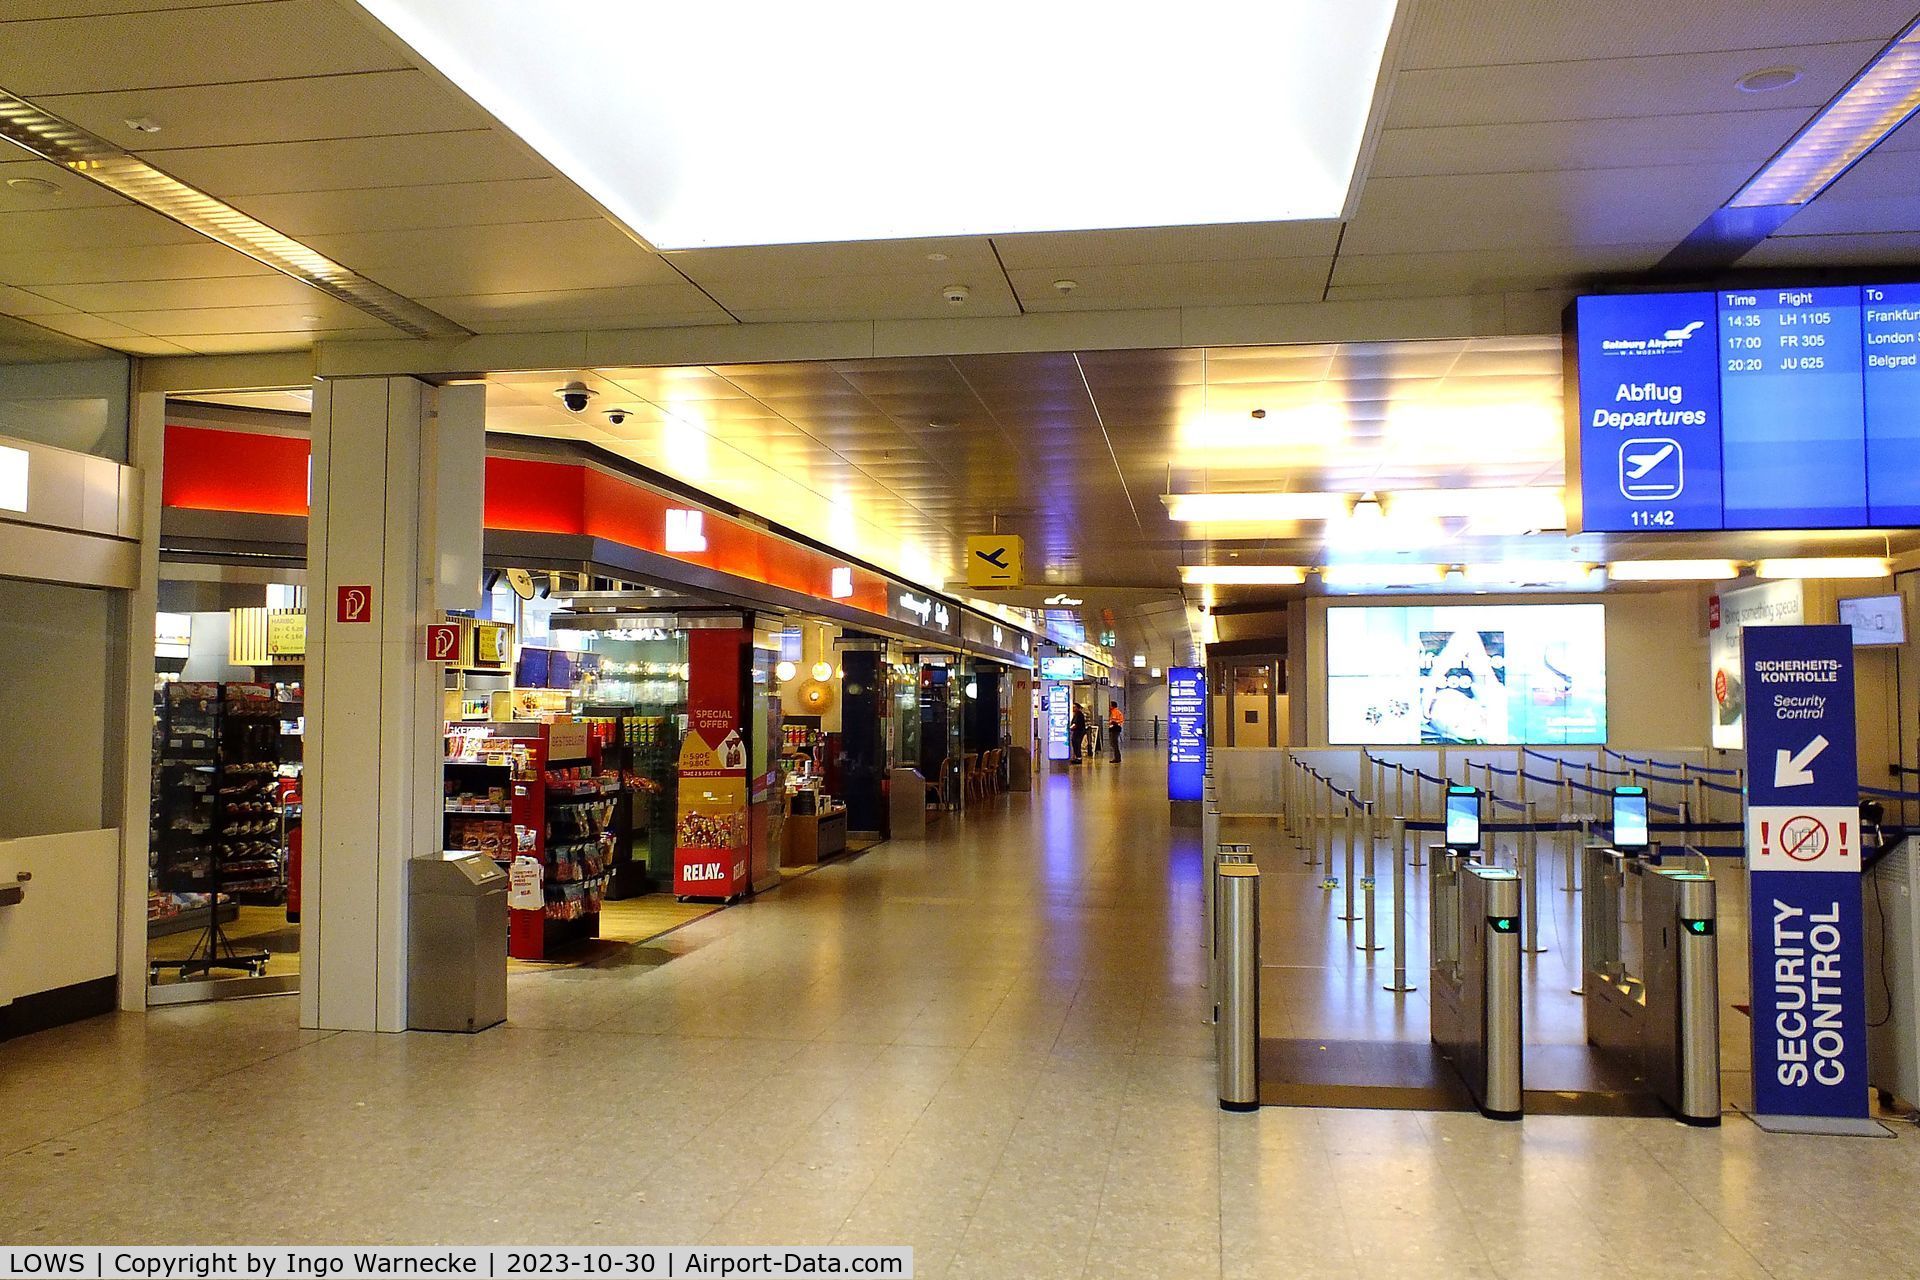 Salzburg Airport, Salzburg Austria (LOWS) - inside the terminal at Salzburg airport